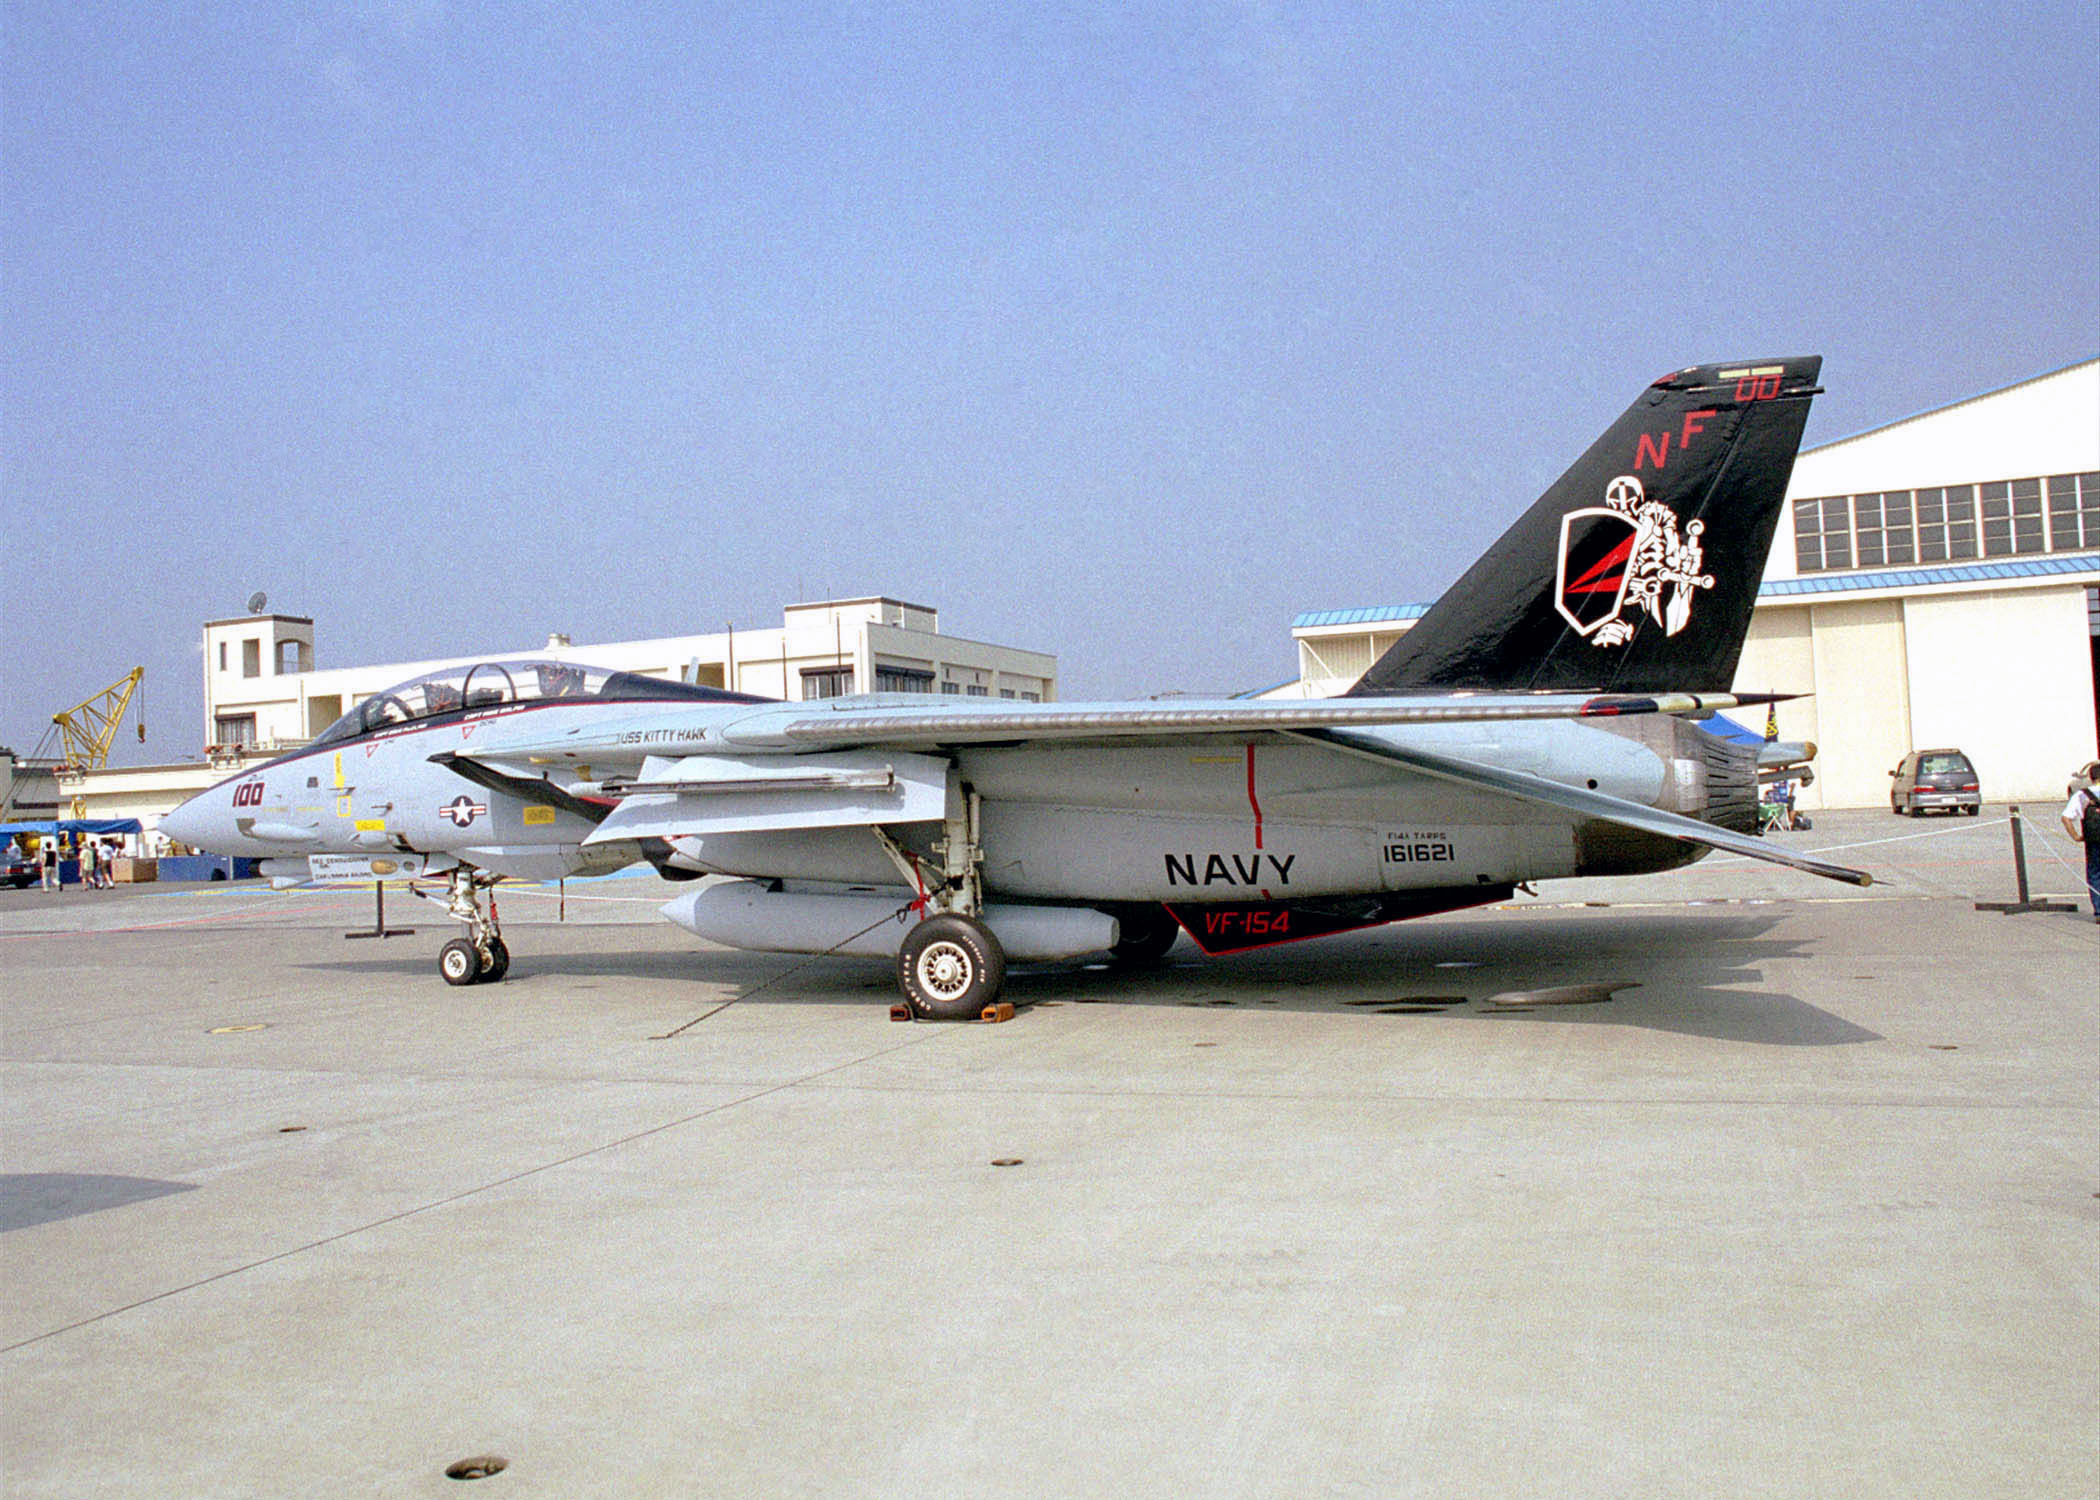 File:F-14 Tomcat VF-154.jpg - Wikipedia